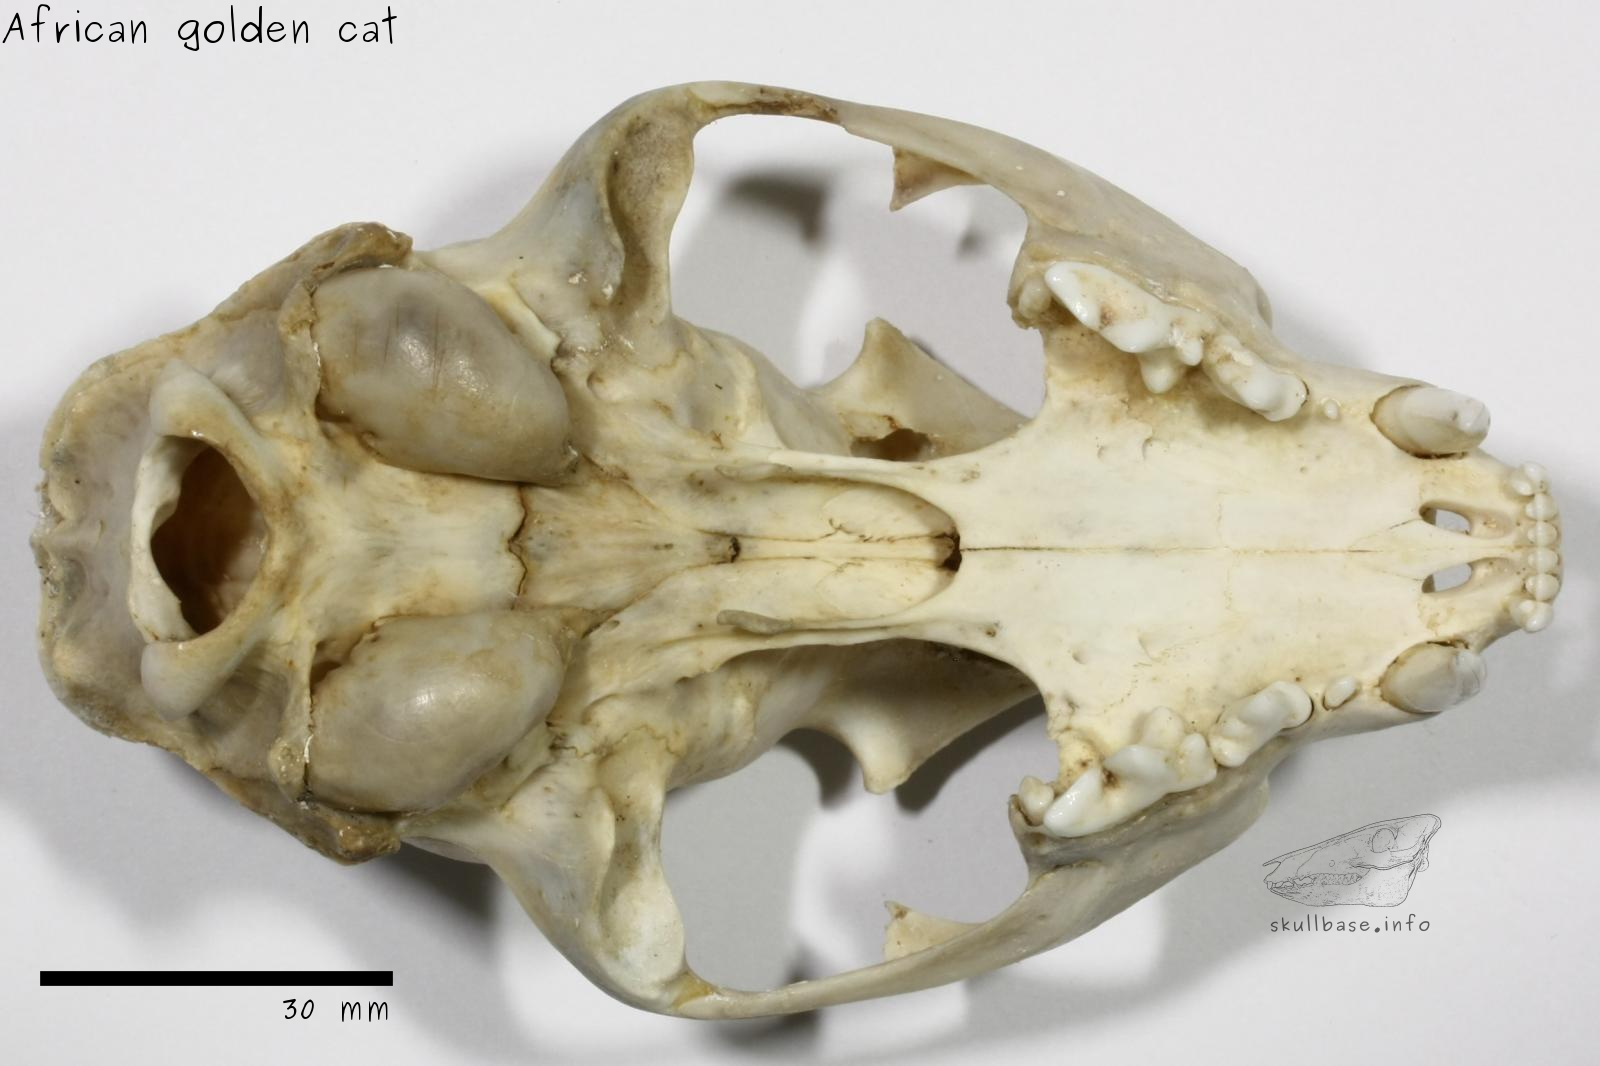 African golden cat (Caracal aurata) skull ventral view